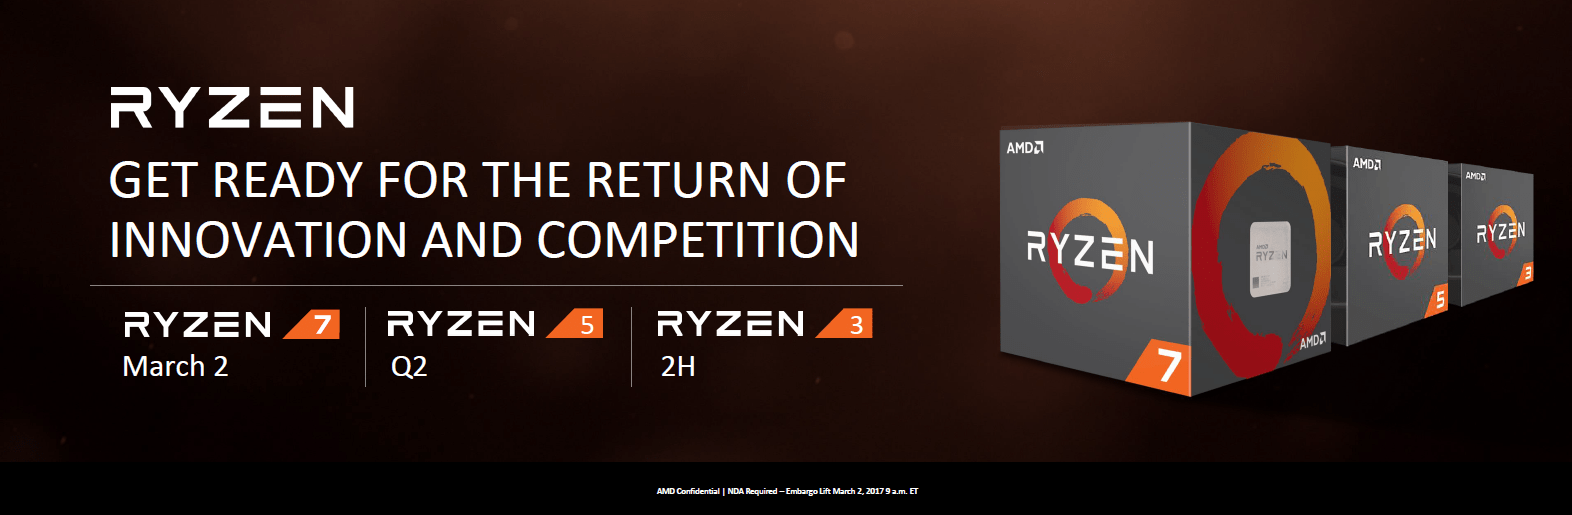 amd ryzen 5 and ryzen 3 series launching in 2 h2 2017 AMD RYZEN 5 1500X Review